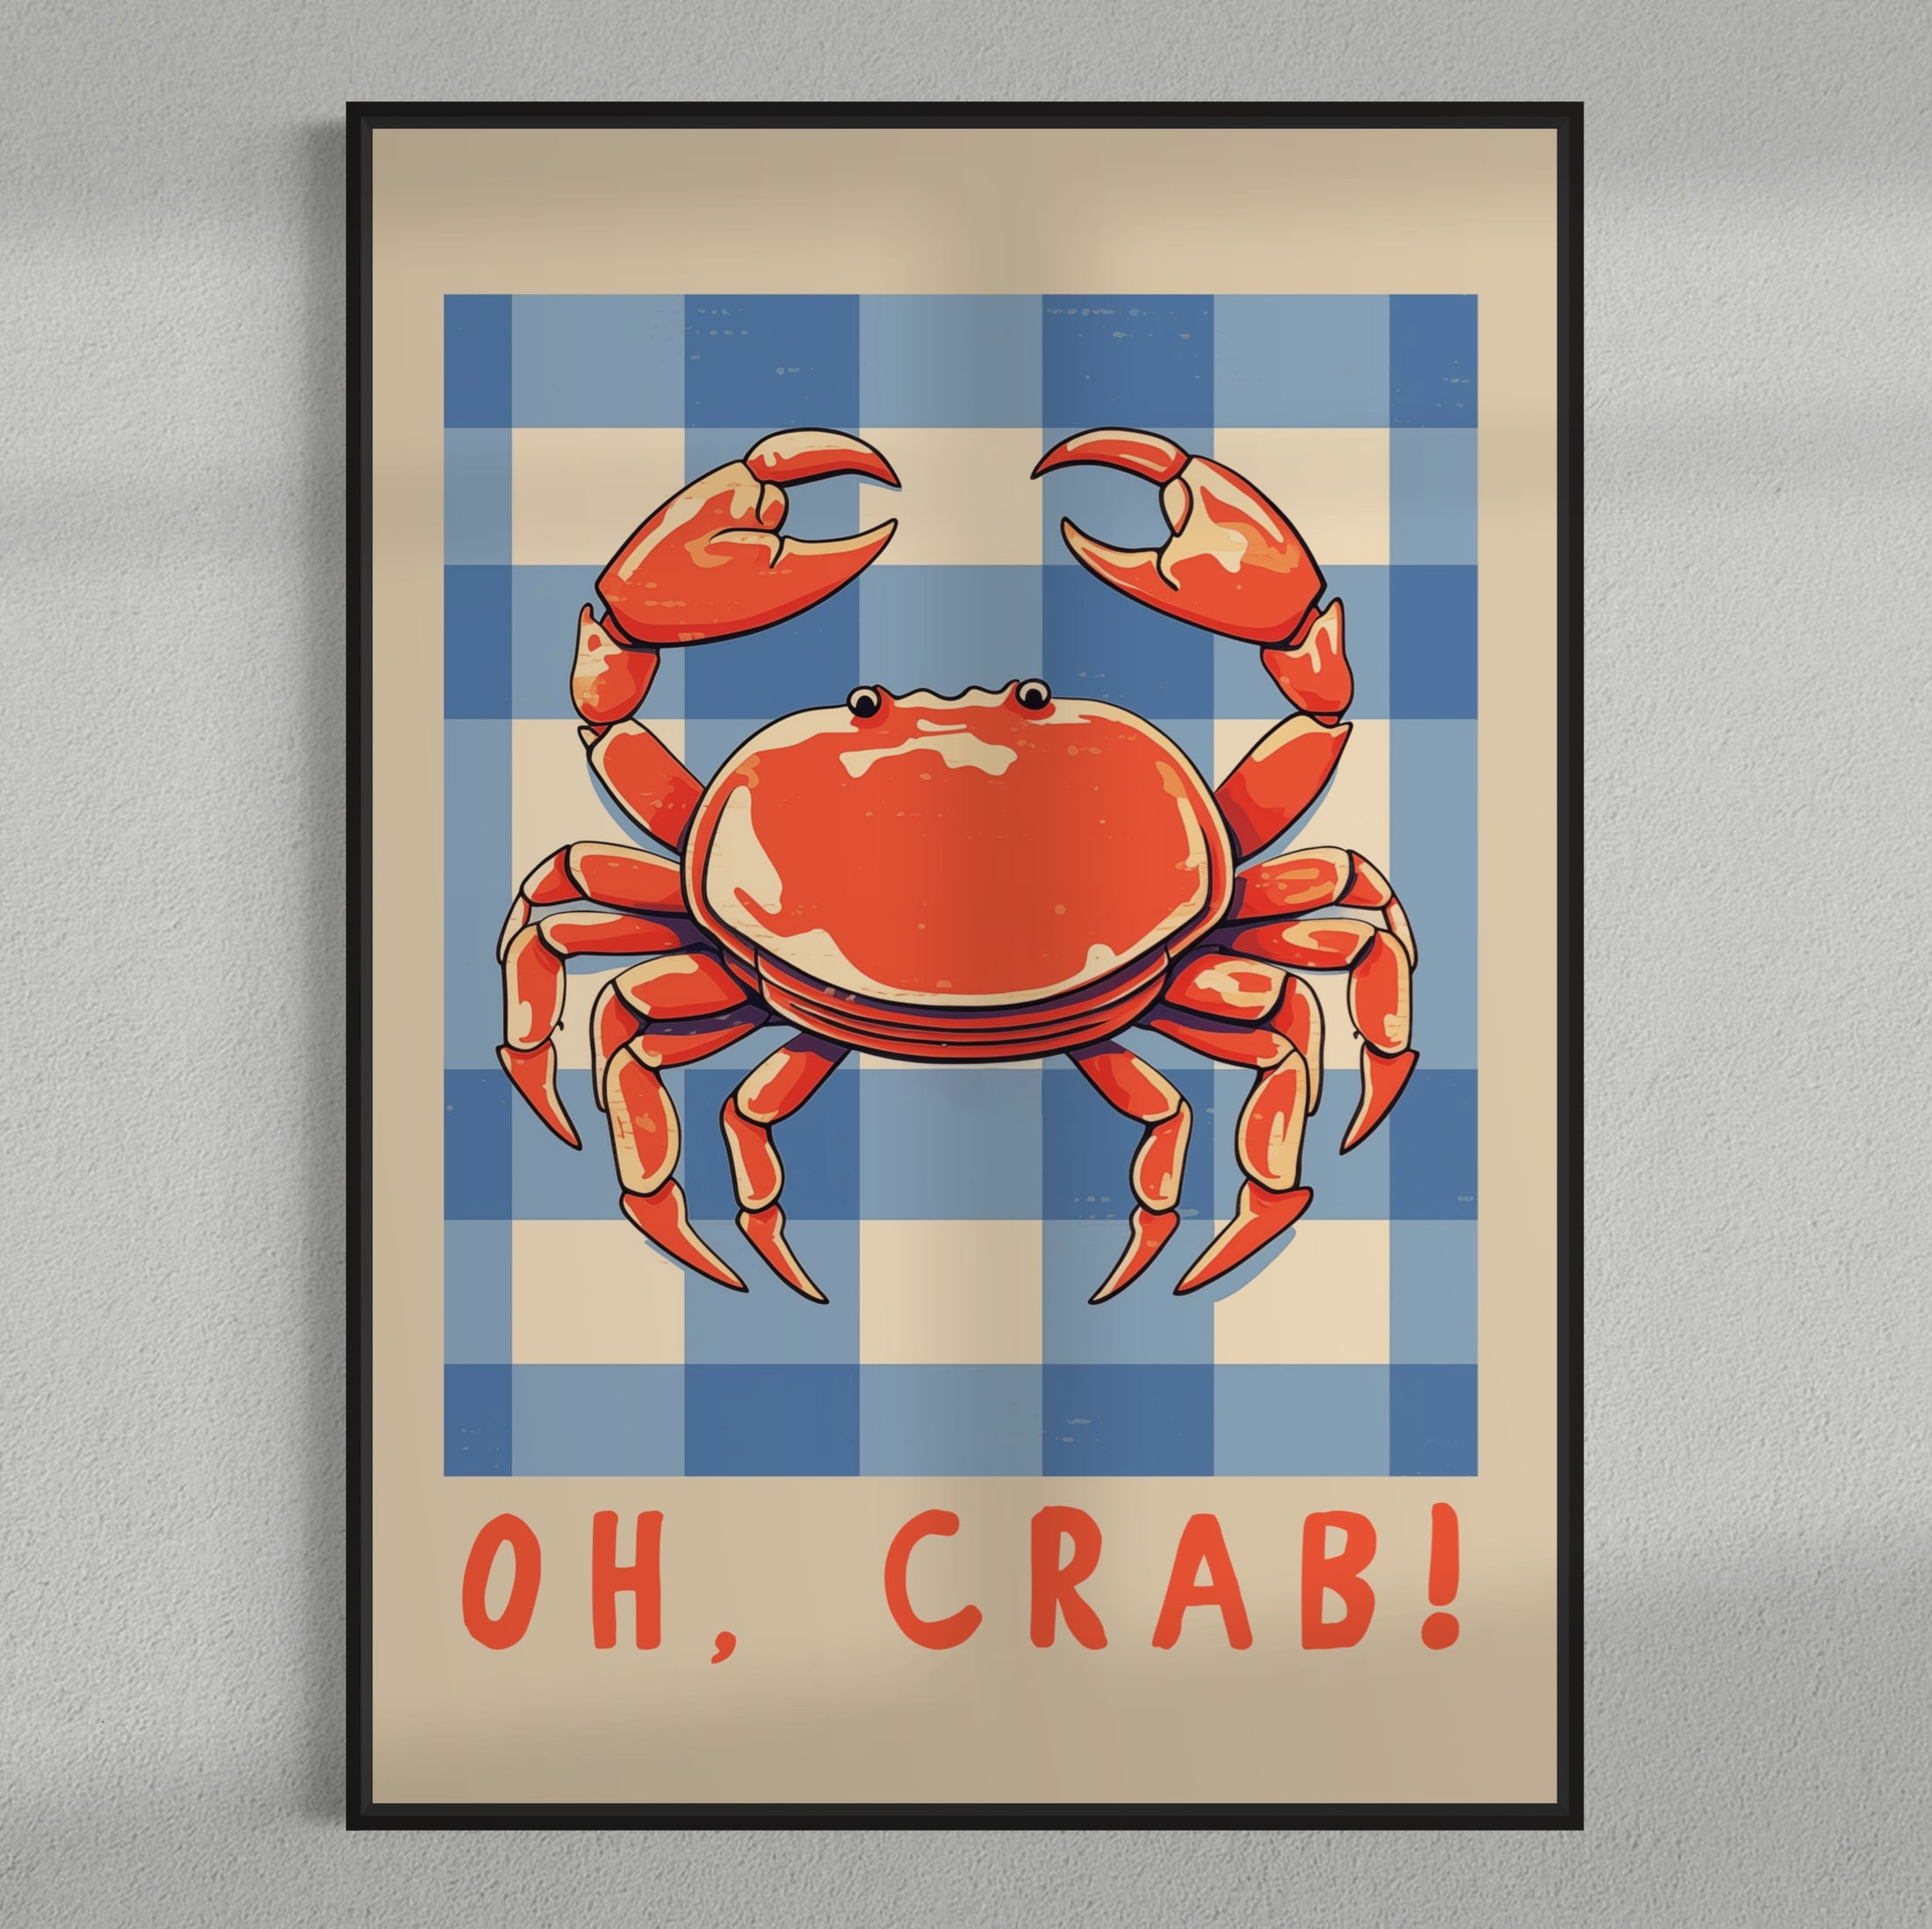 Oh, Crab!